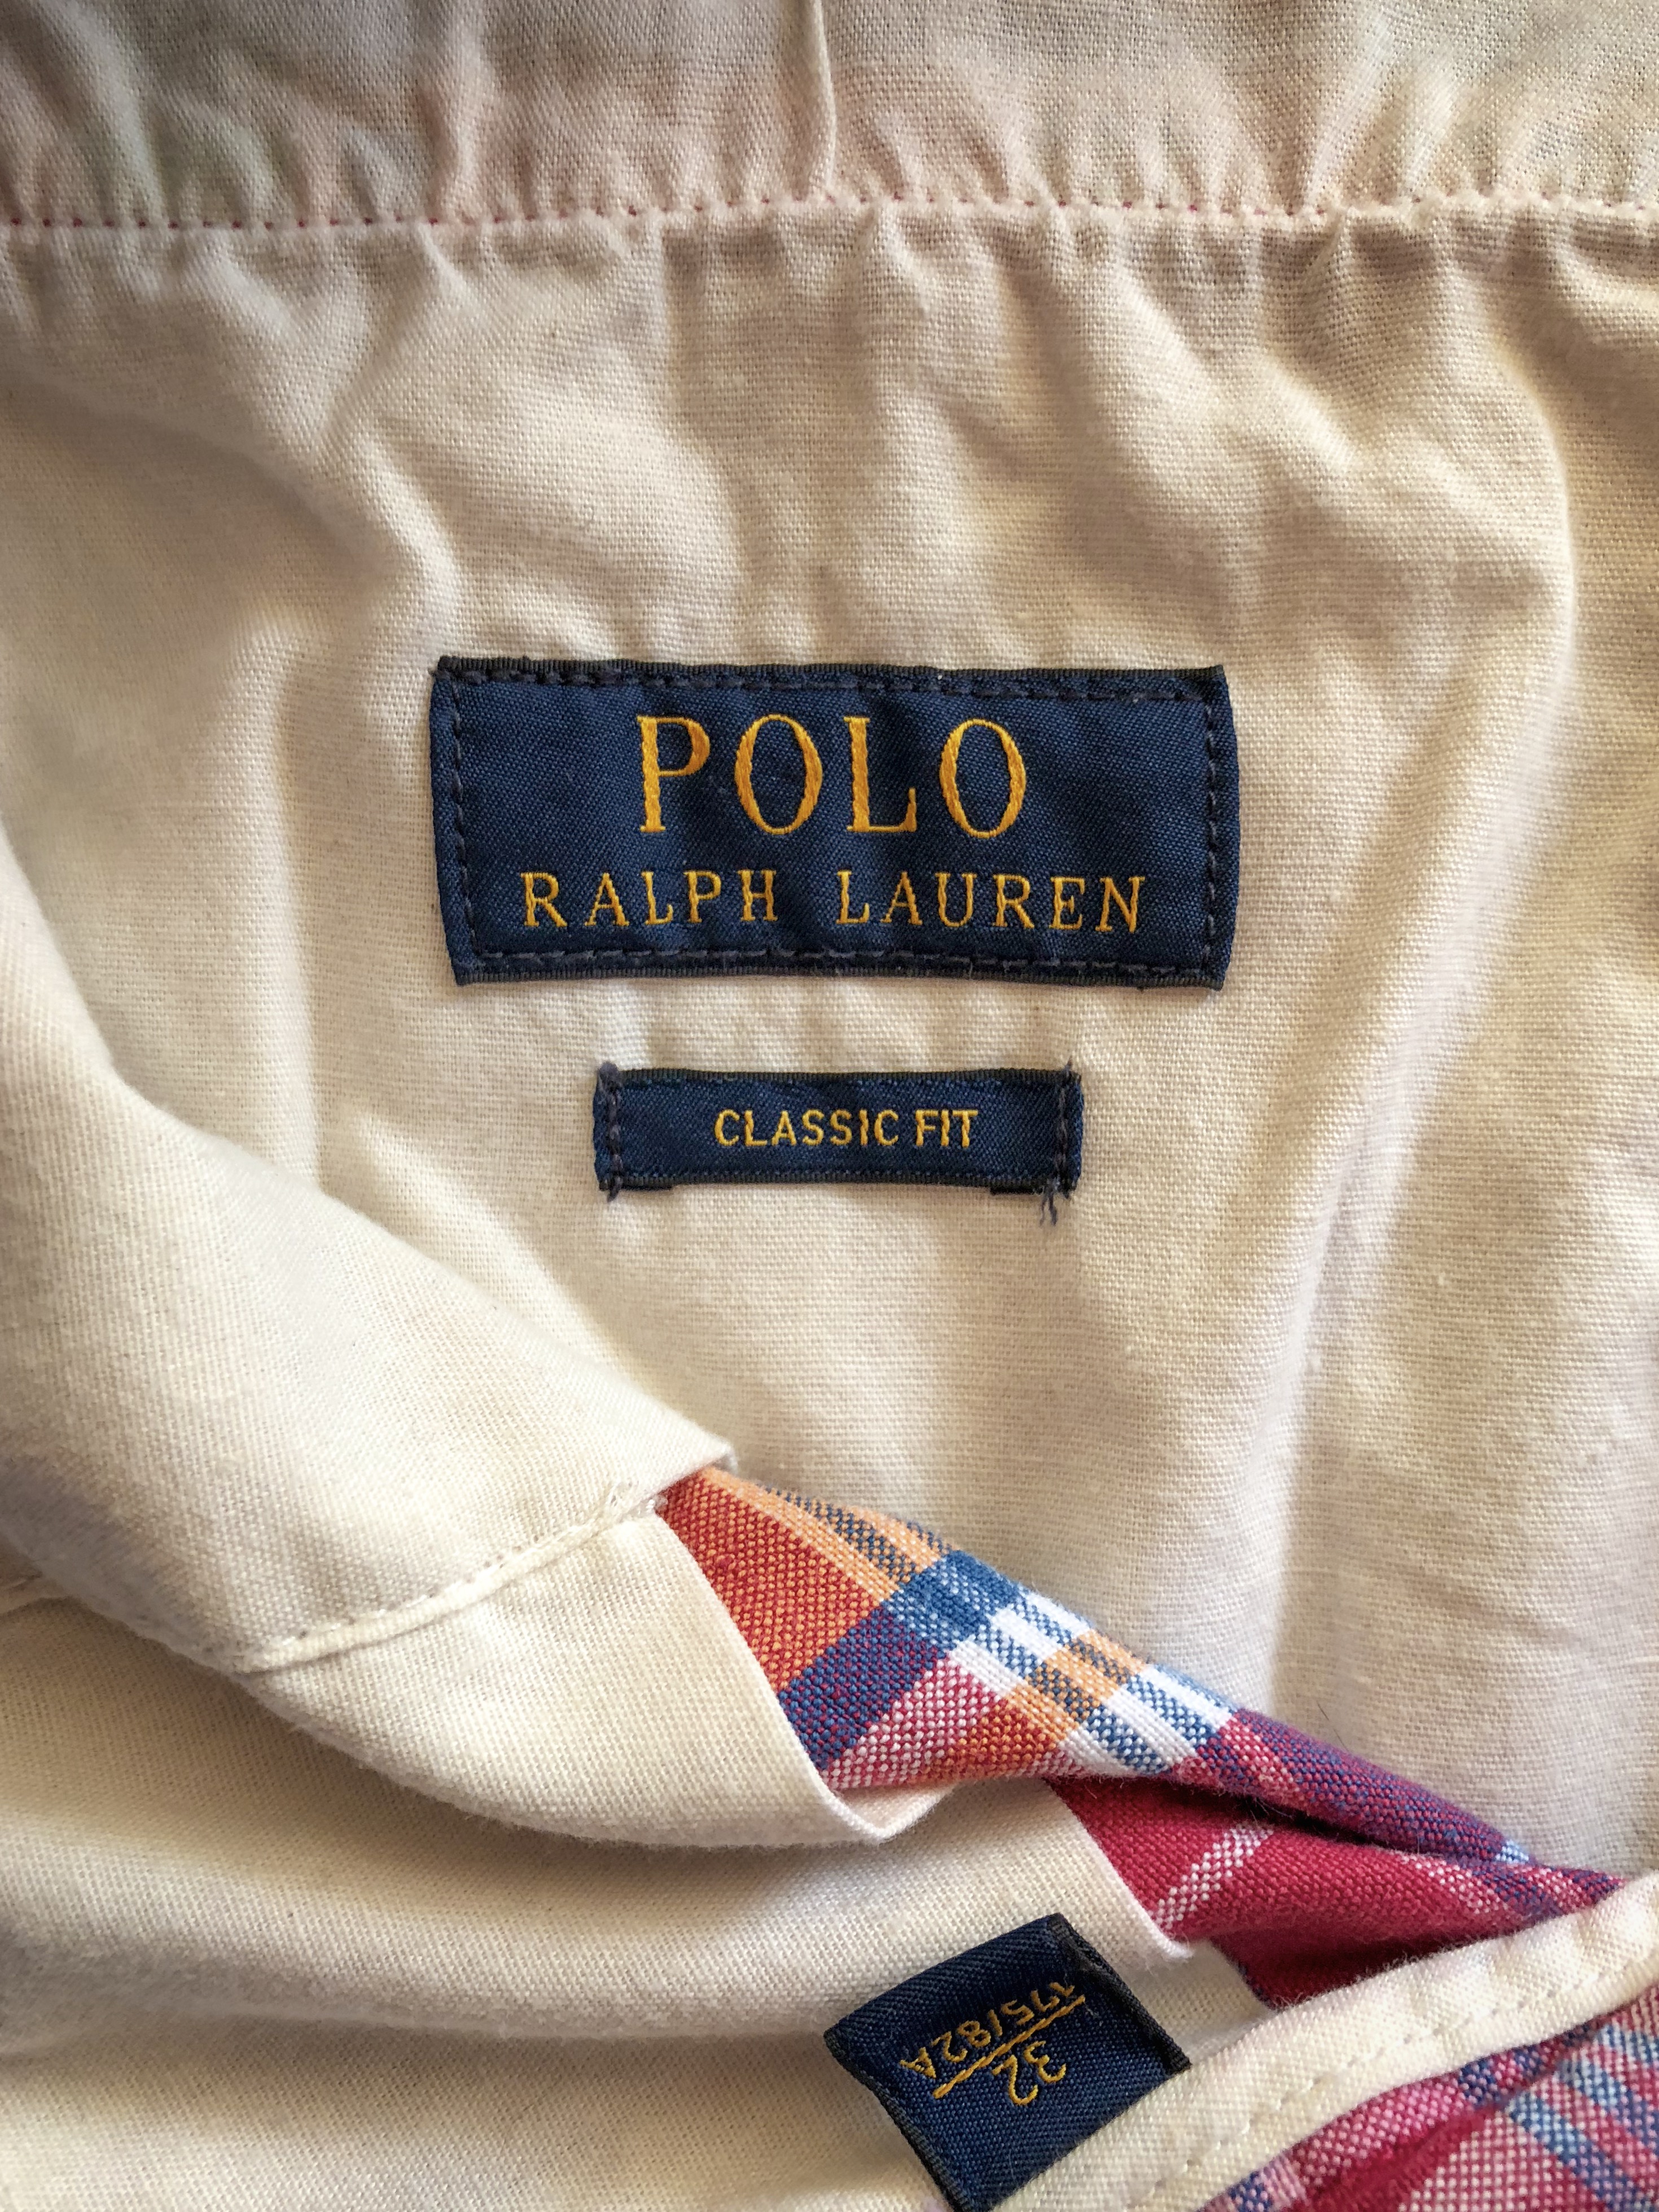 polo ralph lauren label guide